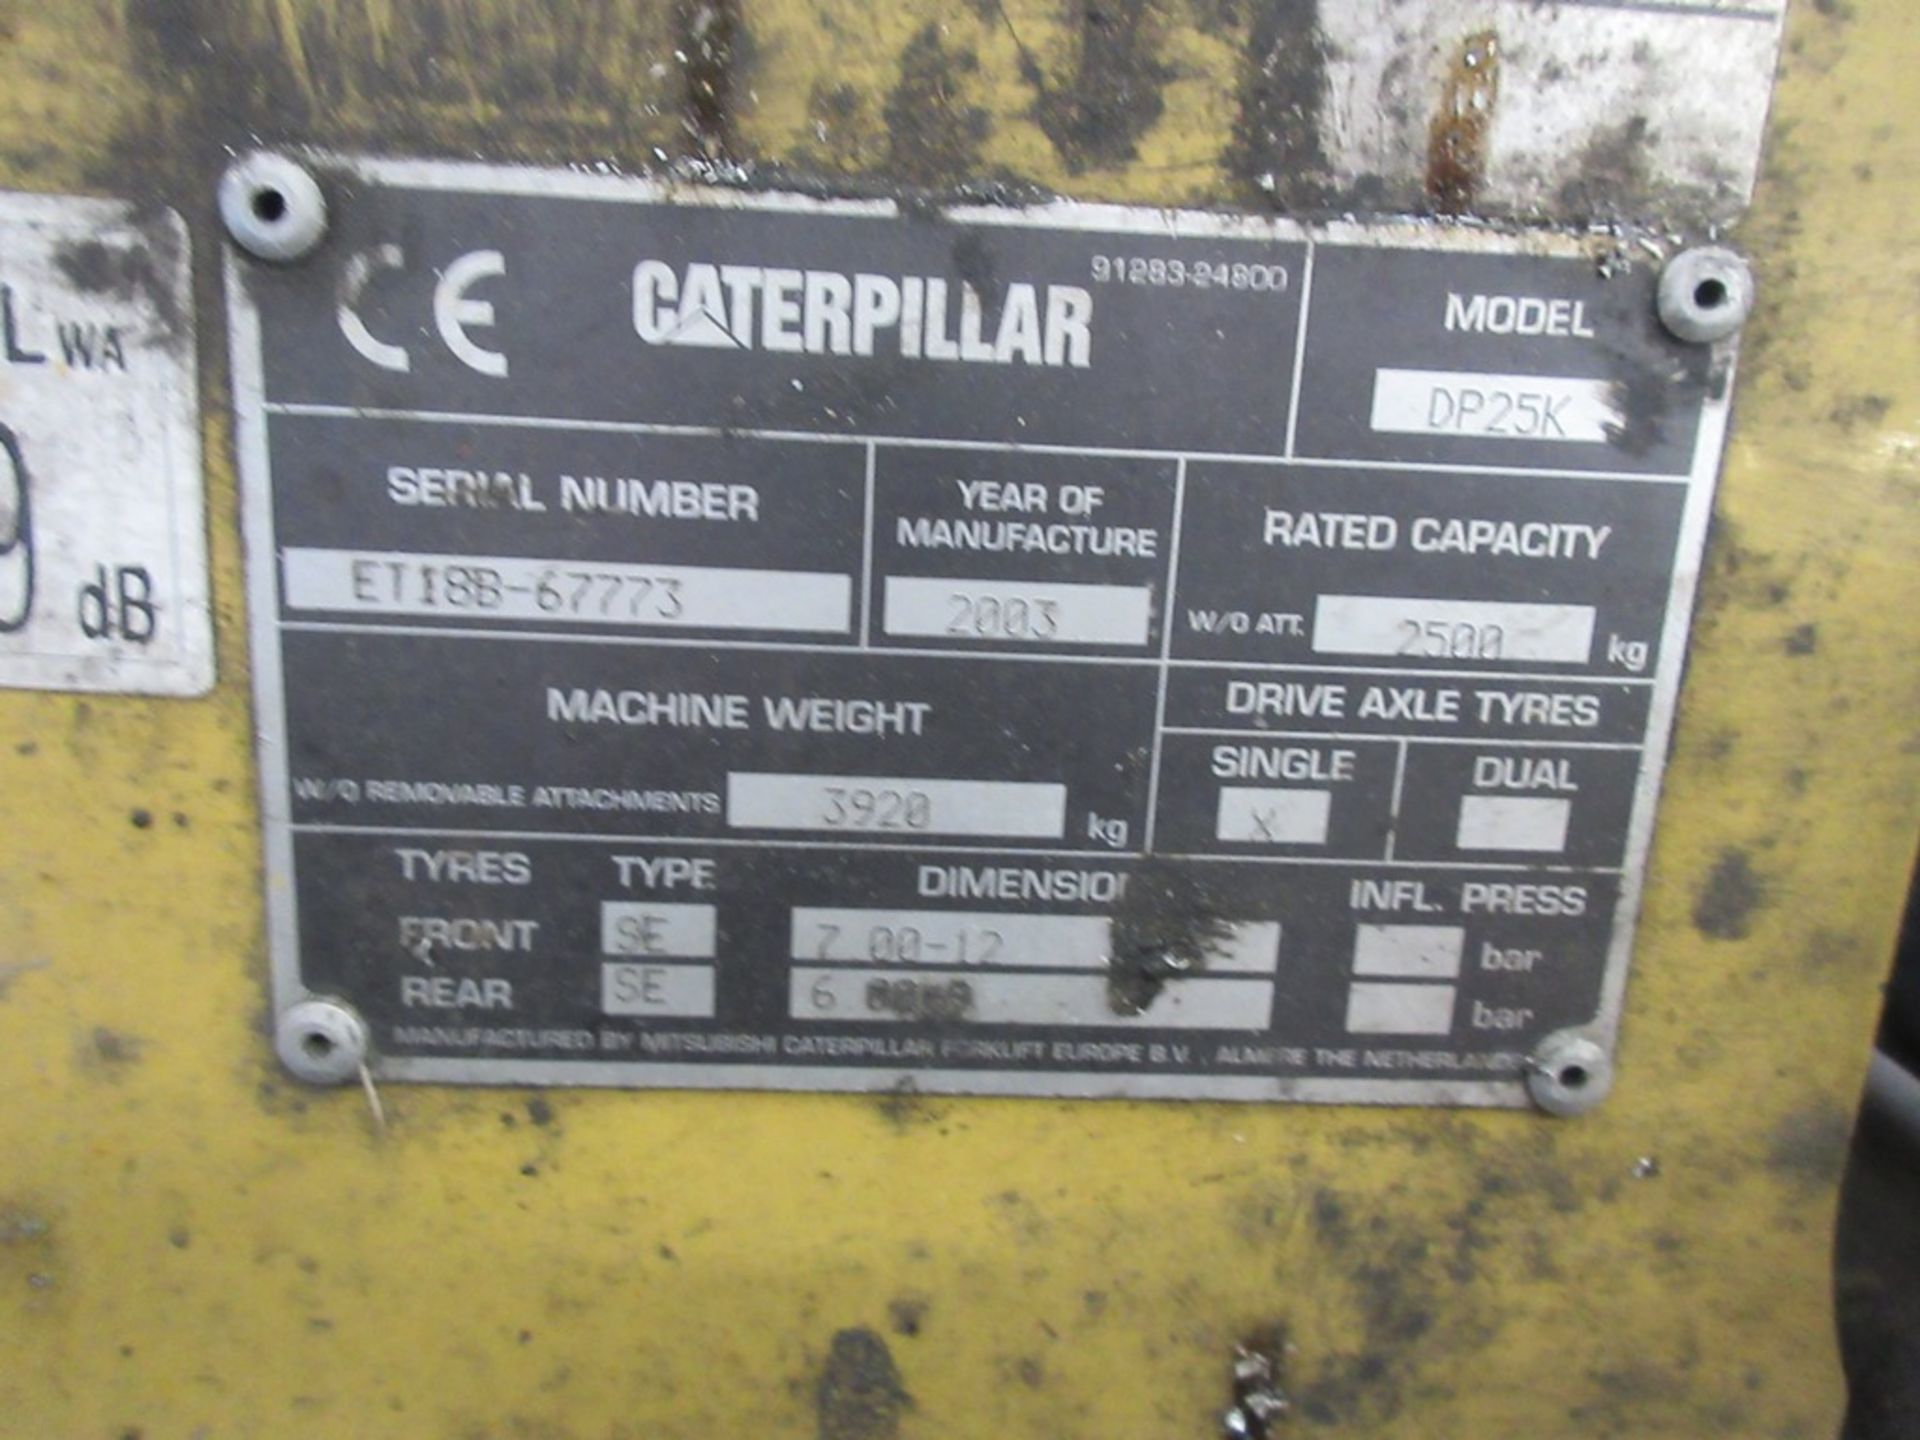 Caterpillar DP25K Forklift truck (2003) - Image 5 of 13